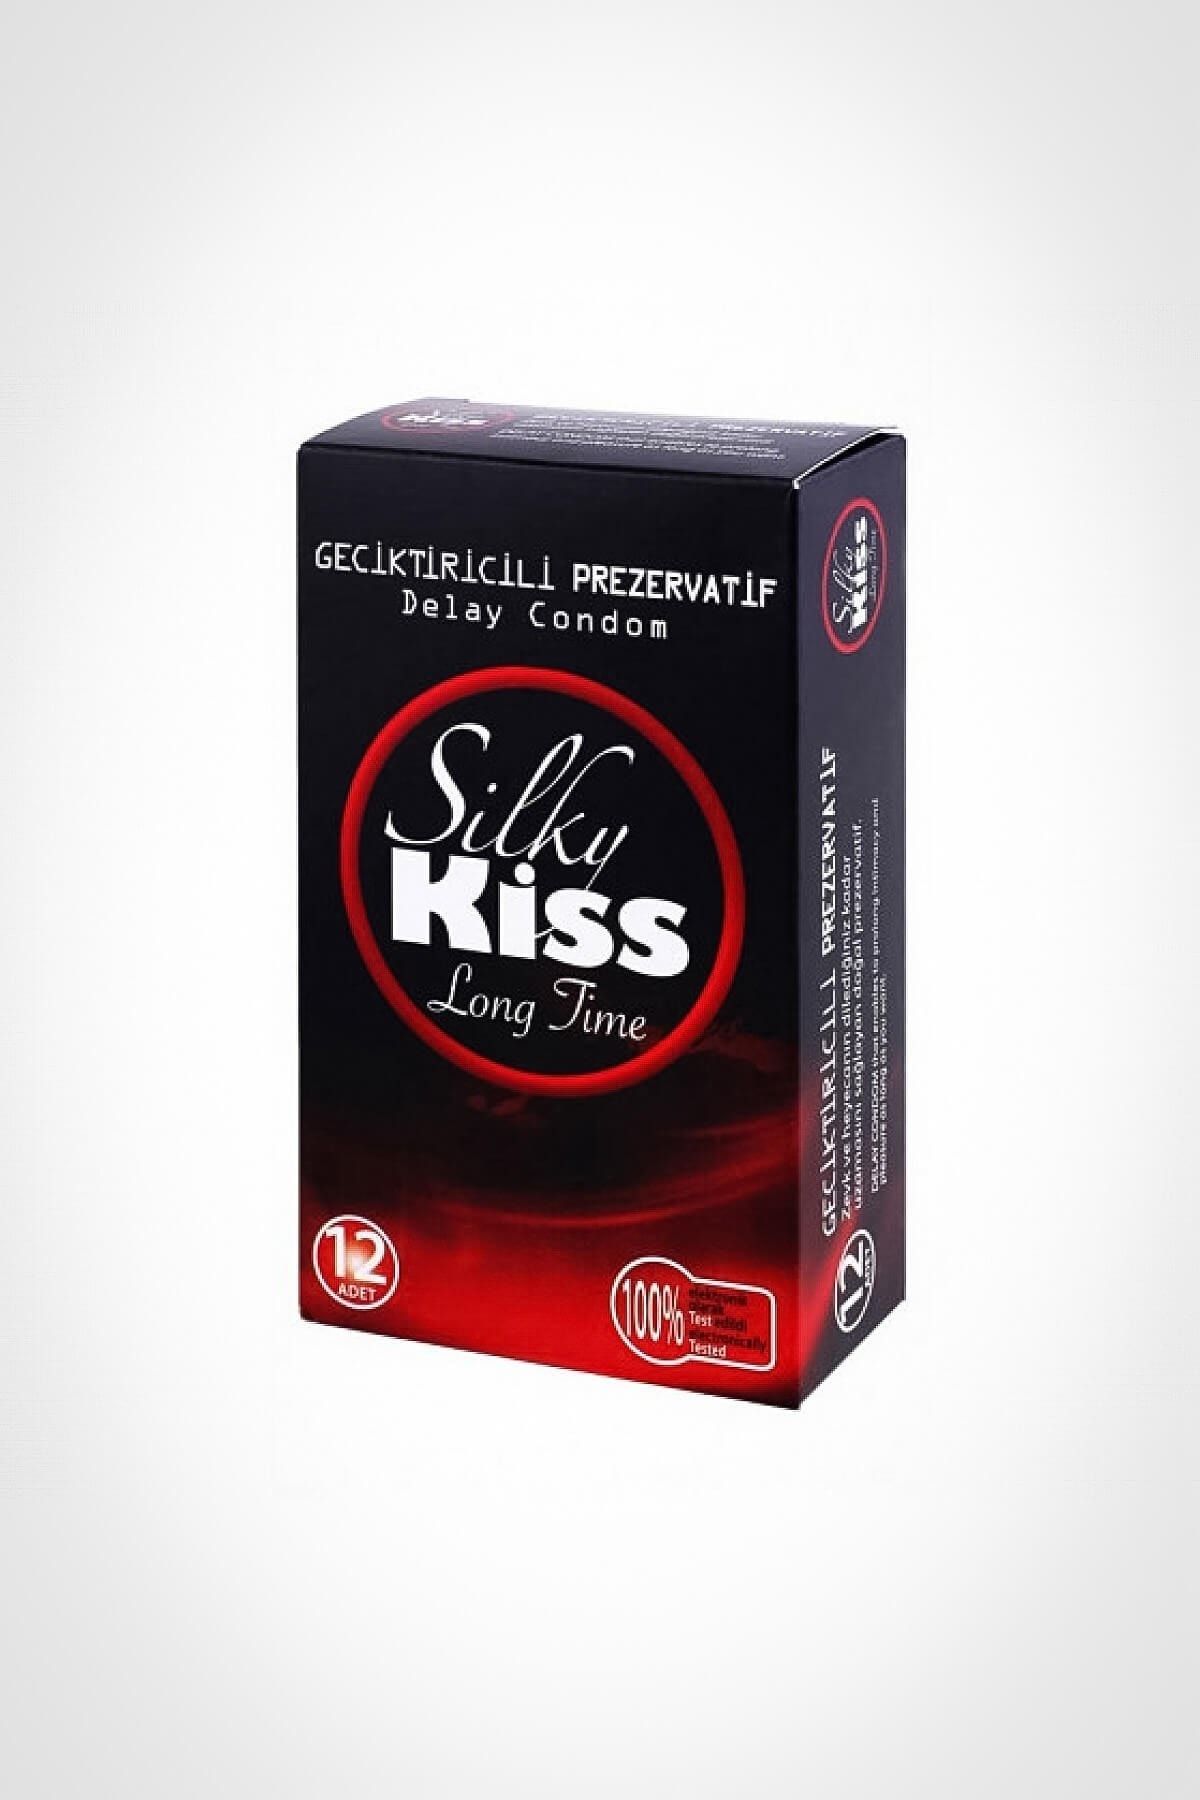 Merry See Silky Kiss Prezervatif Long Time Condom (36 Adet)